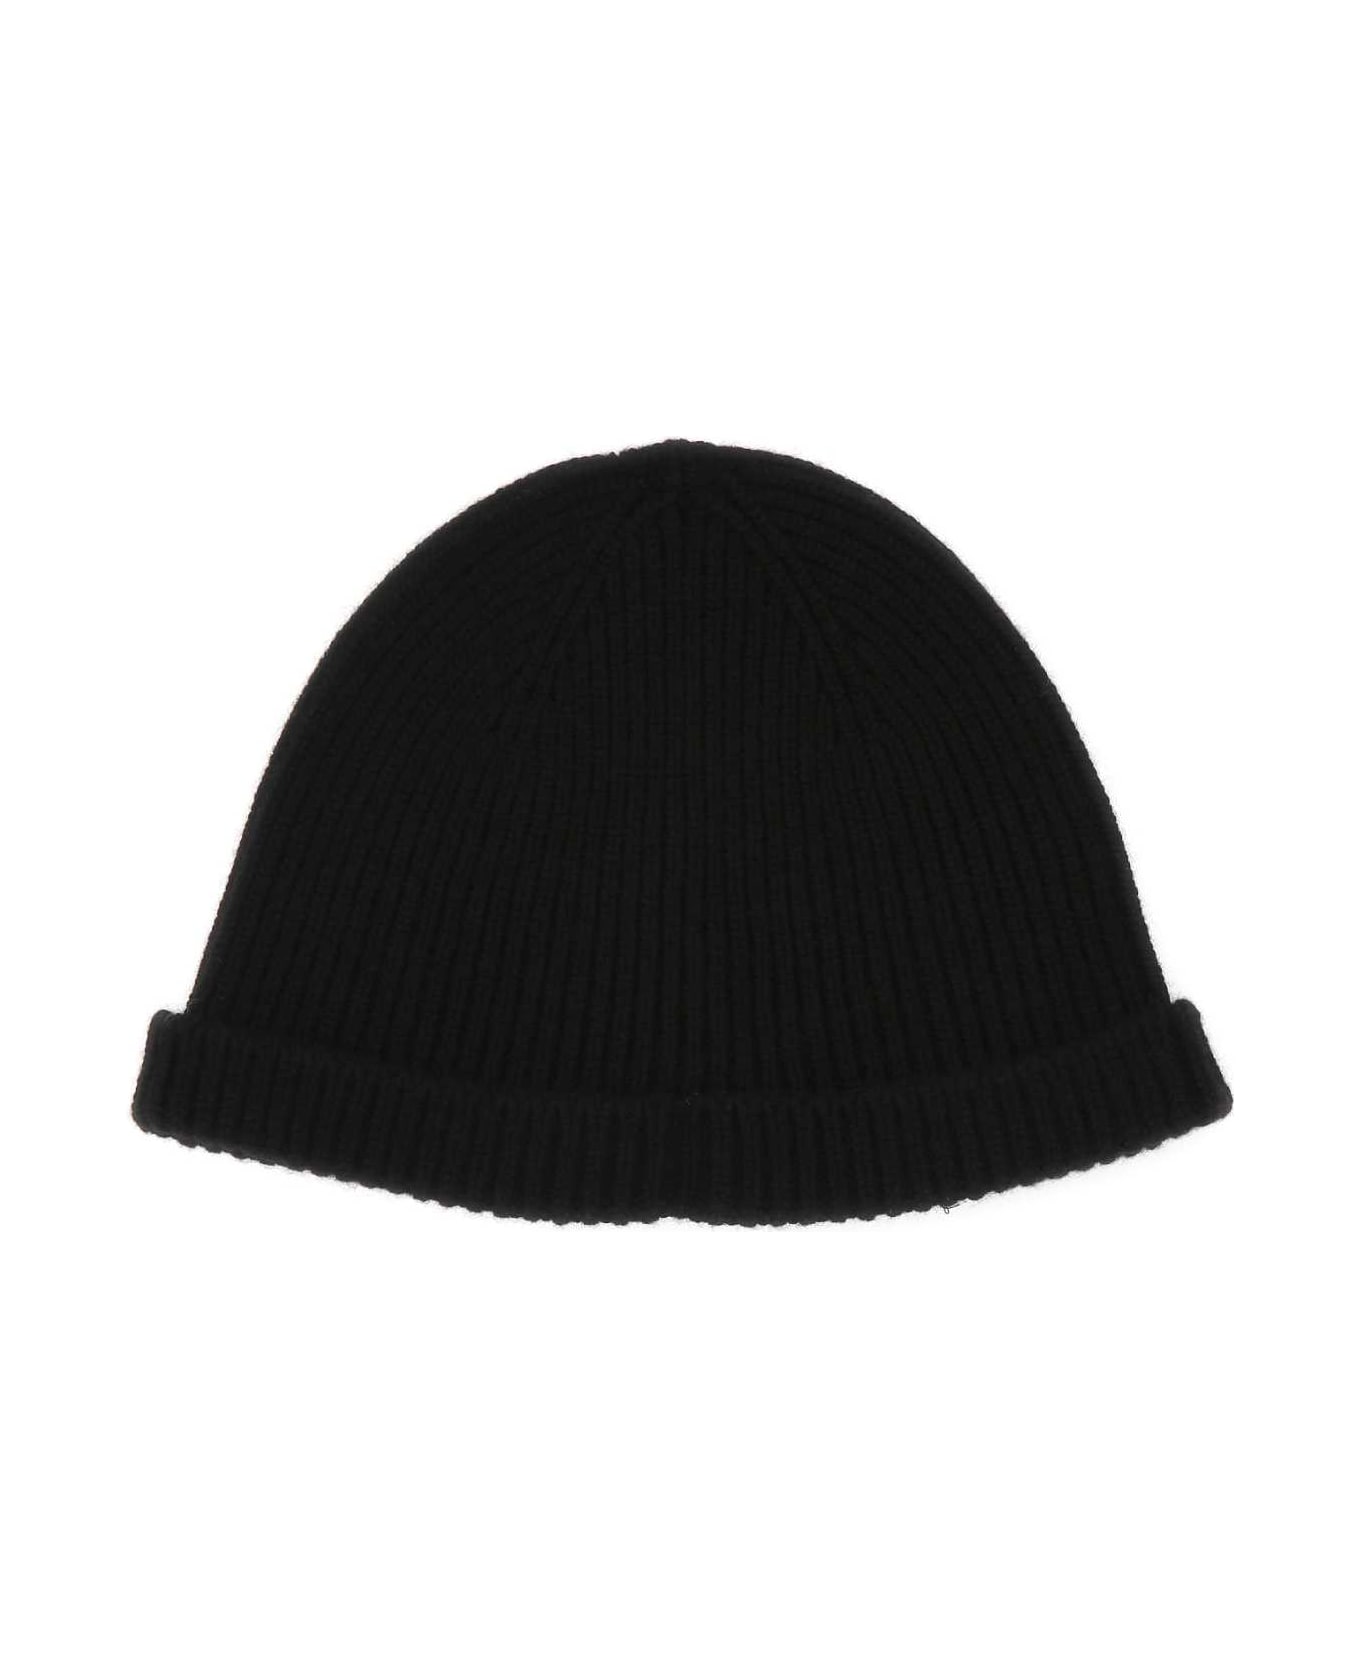 Jil Sander Black Cashmere Beanie Hat - 001